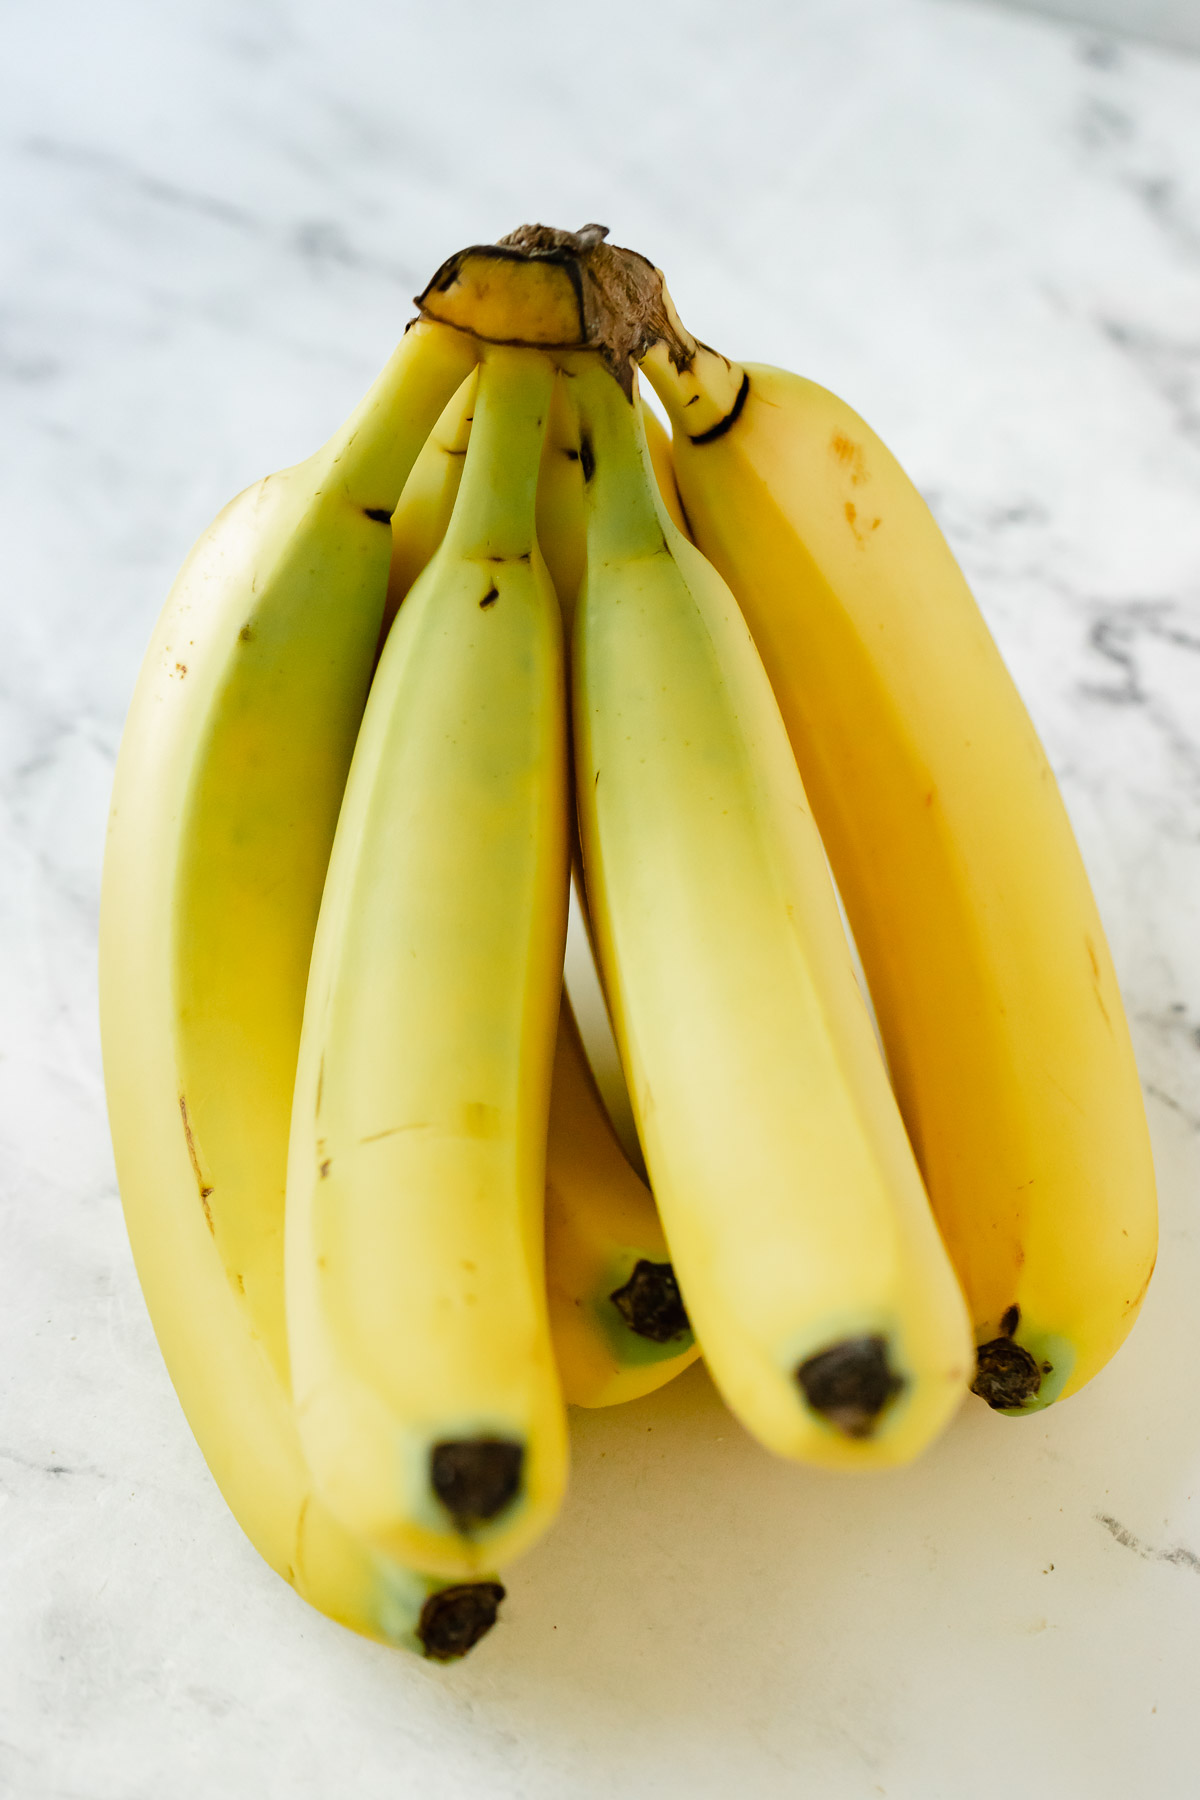 a bunch of unripe bananas